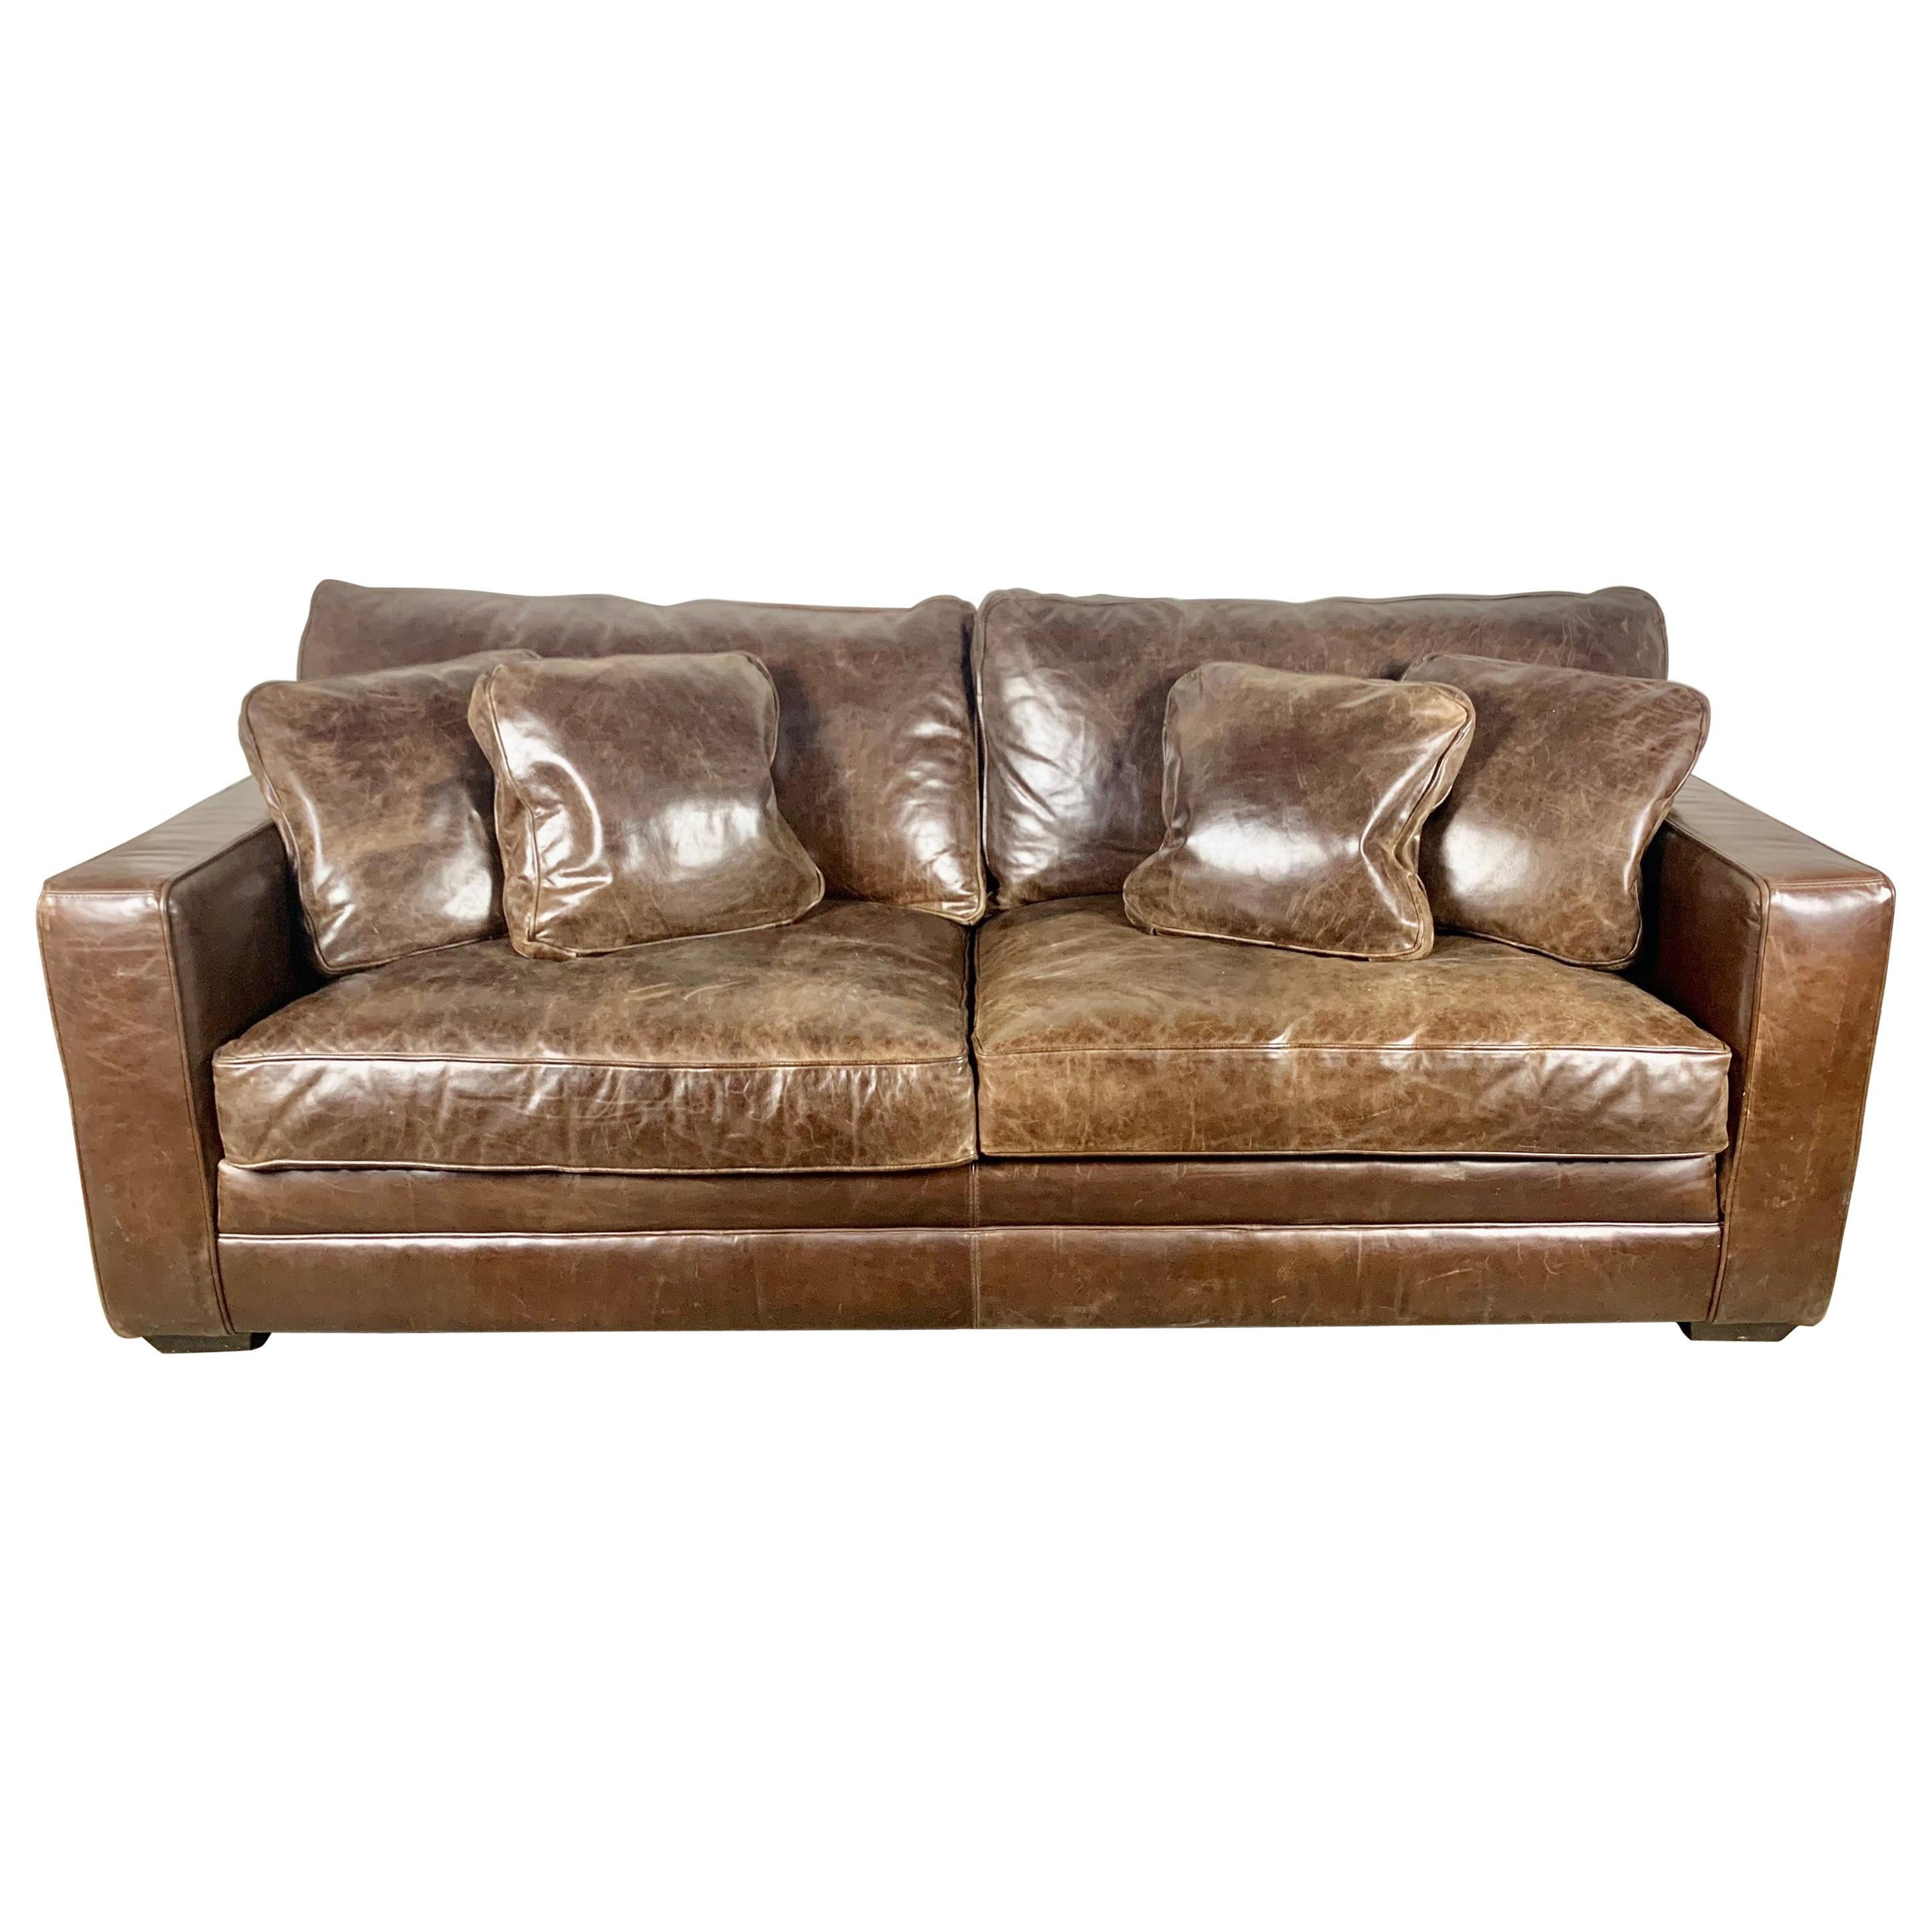 Authentic Vintage Leather Sofa w/ Pillows